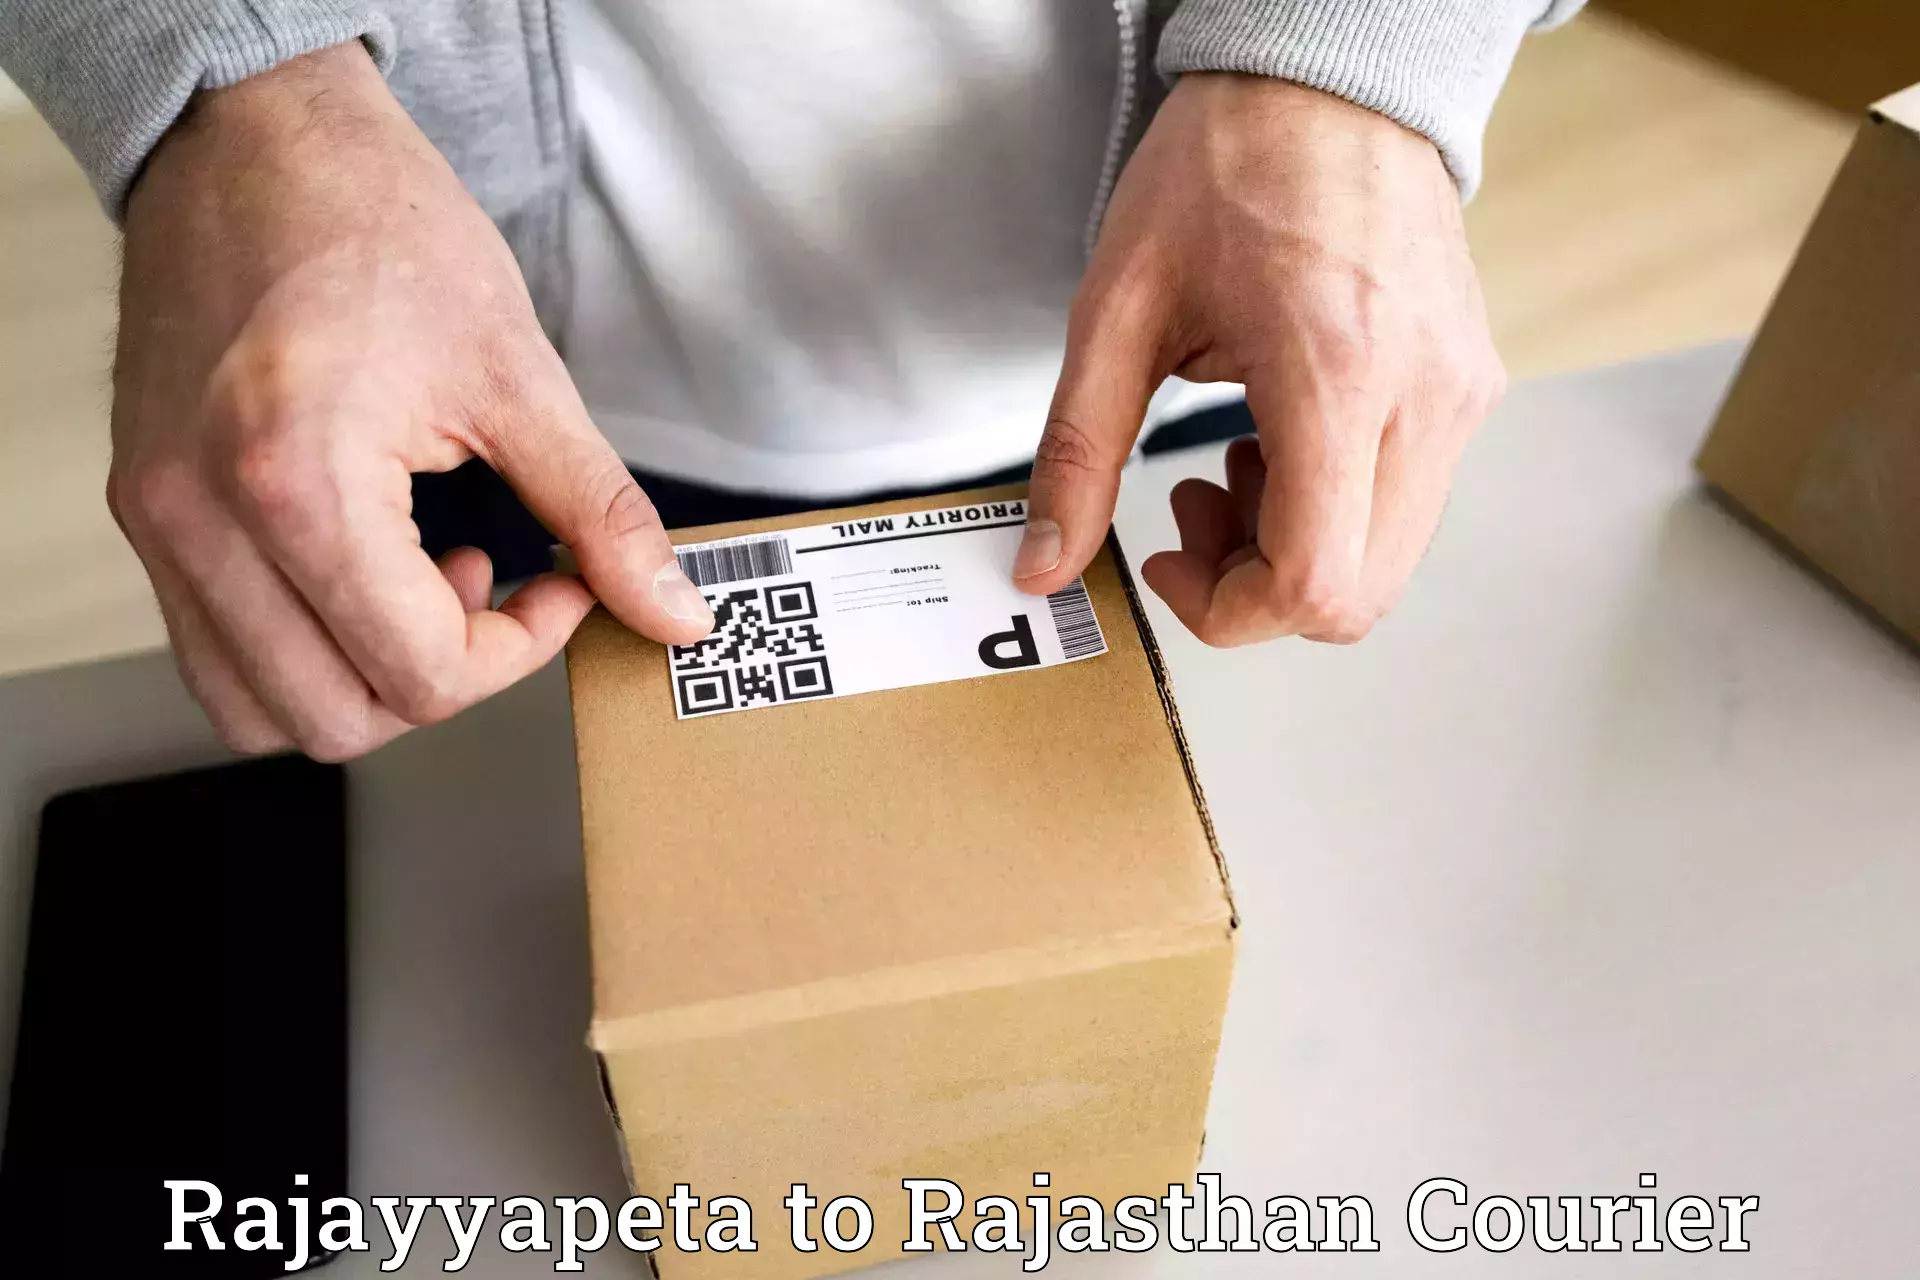 Dynamic courier operations Rajayyapeta to Yeswanthapur